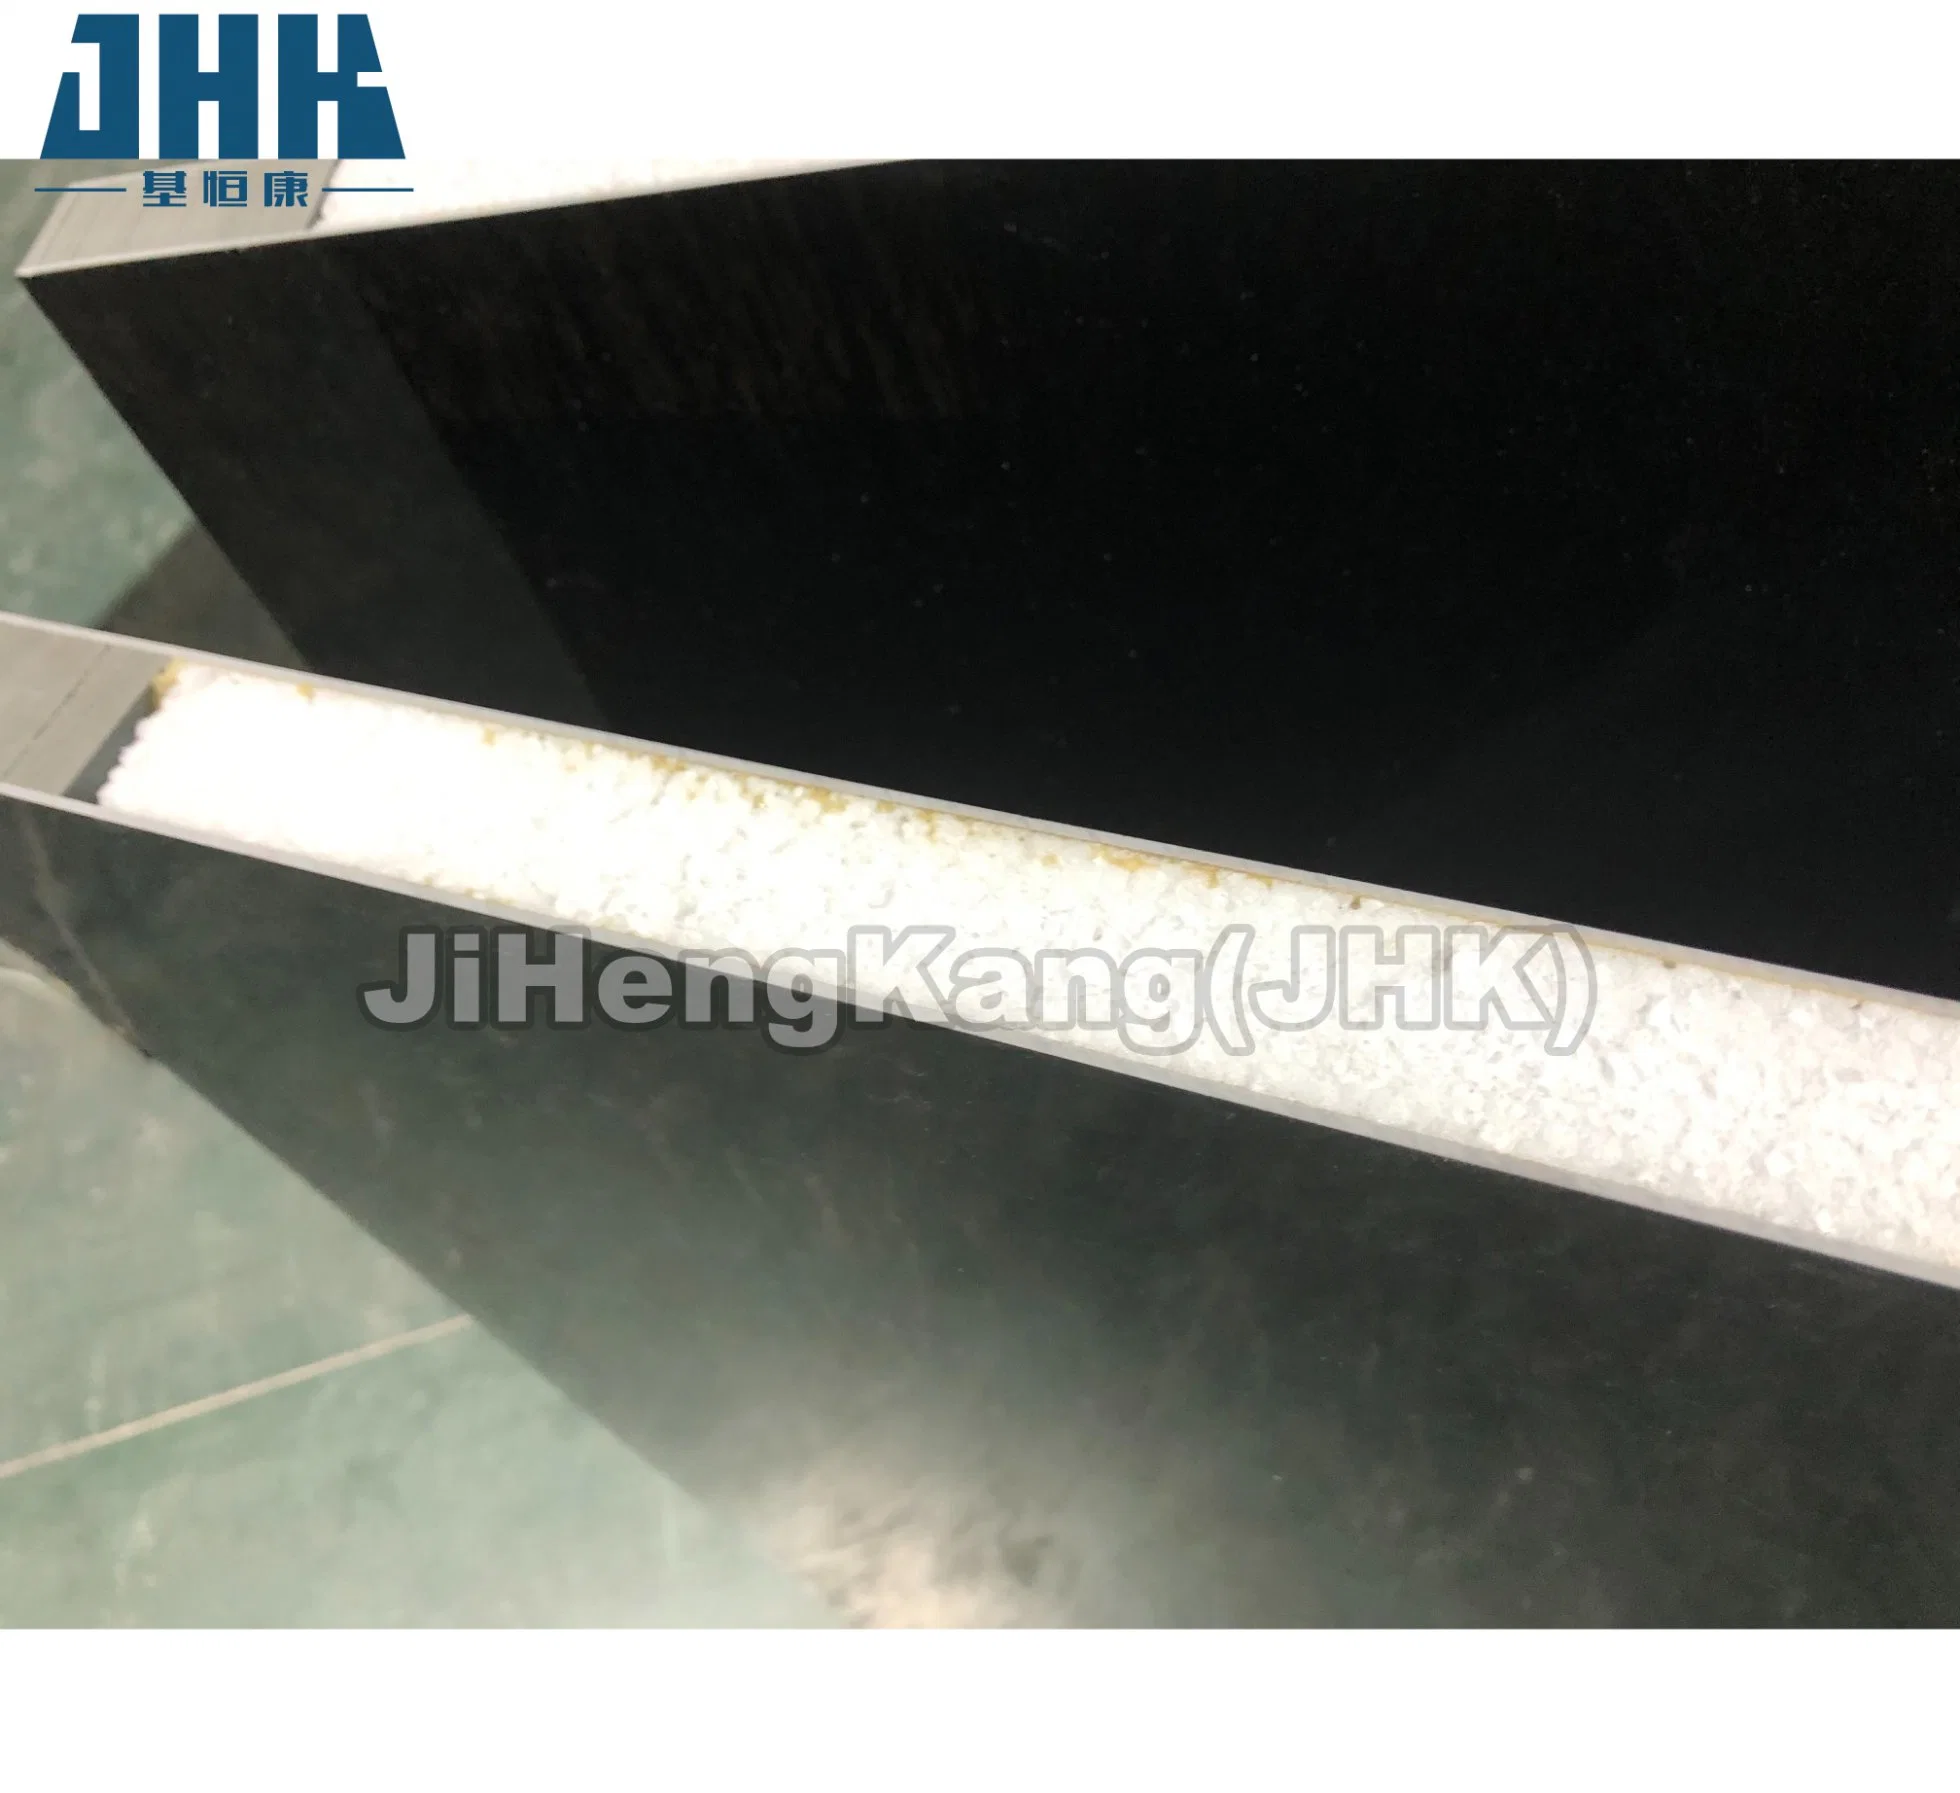 Jhk-U015 High quality/High cost performance Interior Mold Grain UPVC Door